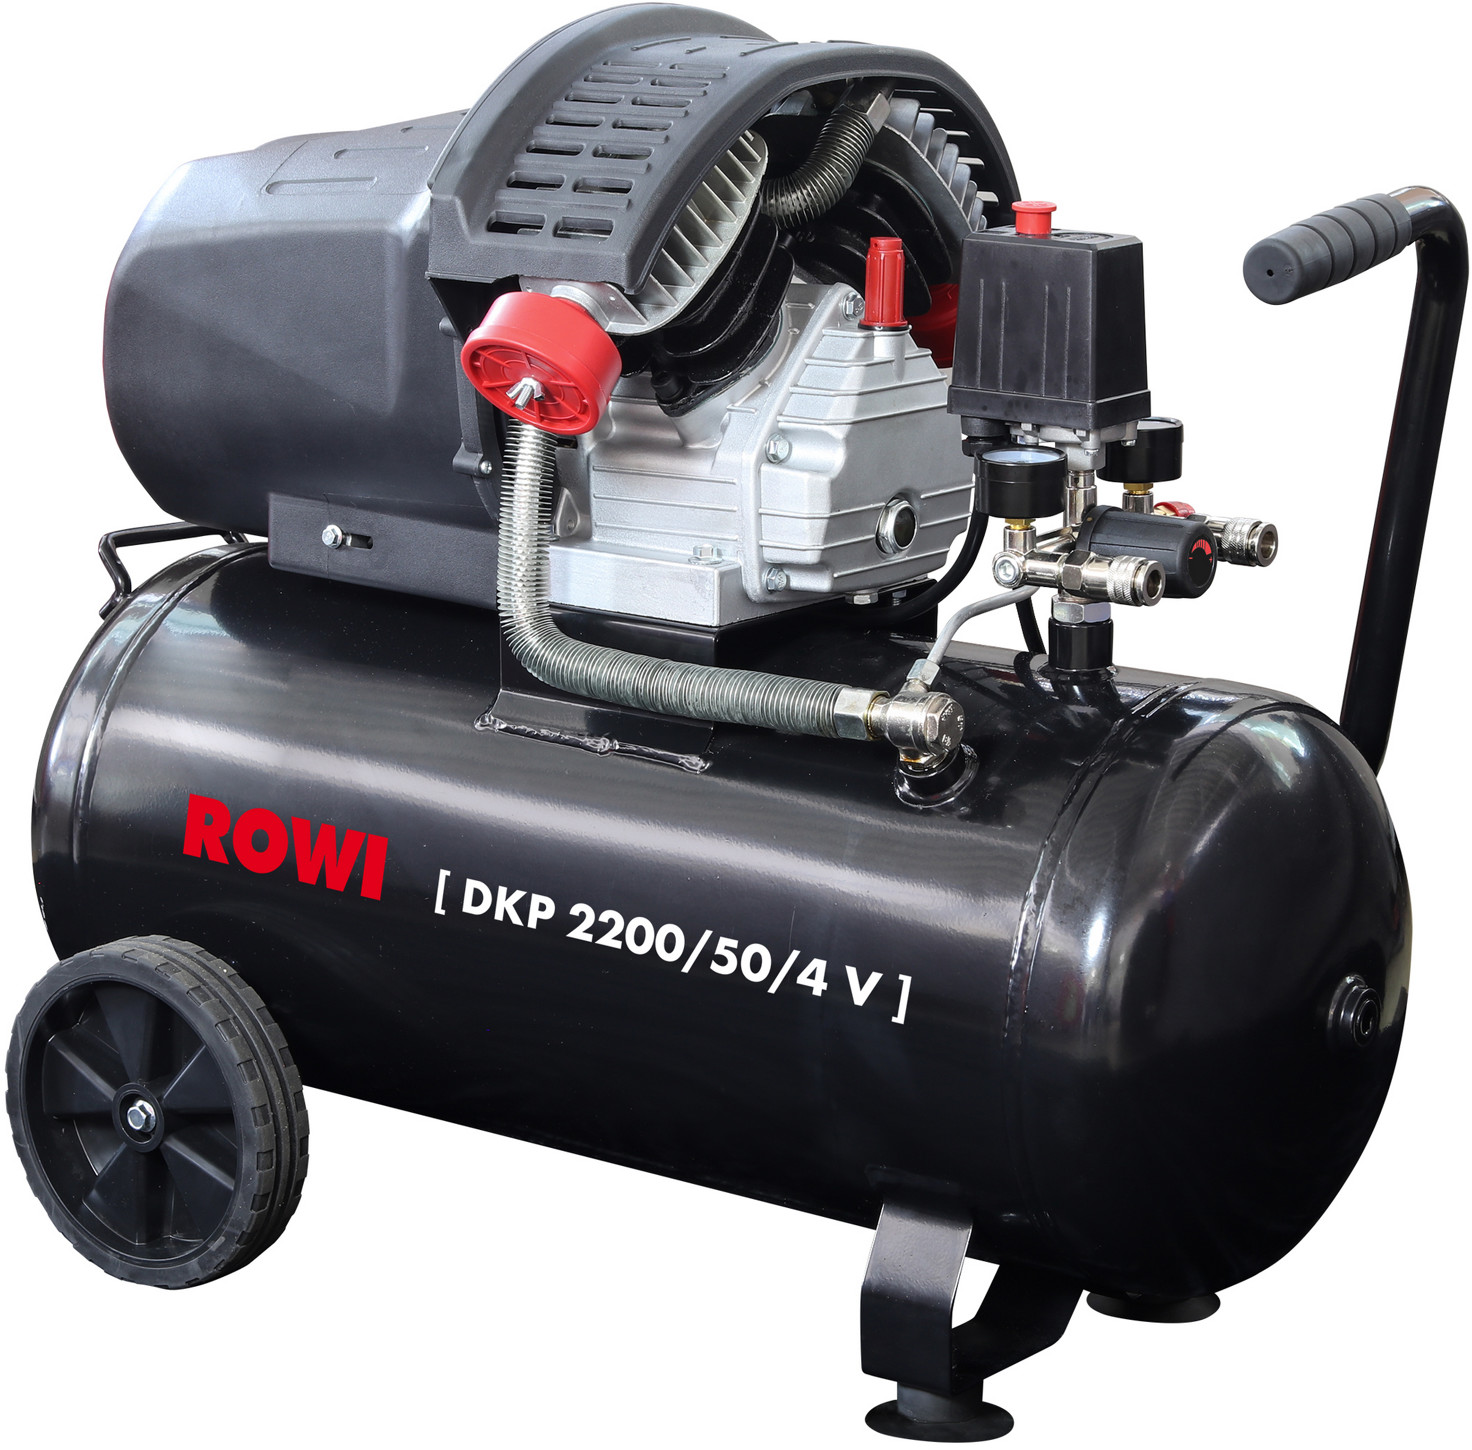 Rowi DKP 2200/50/4 V ab 261,99 € | Preisvergleich bei